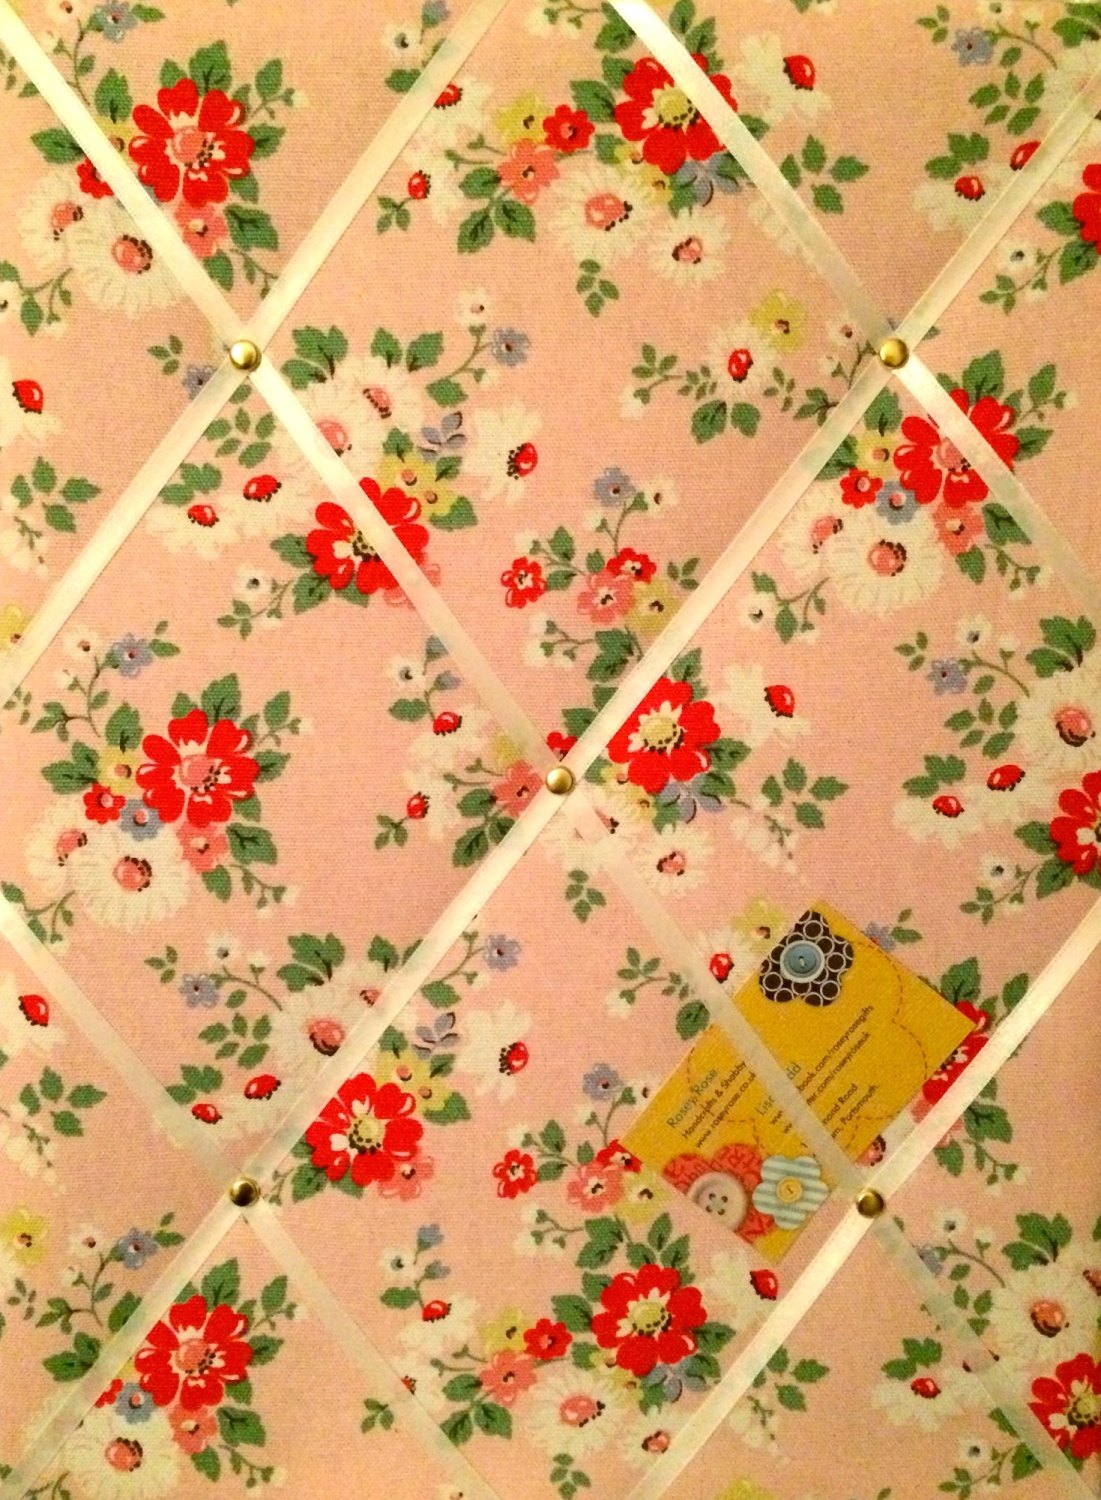 Medium 40x30cm Cath Kidston Pink Daisy / Daisies Hand Crafted Fabric Notice